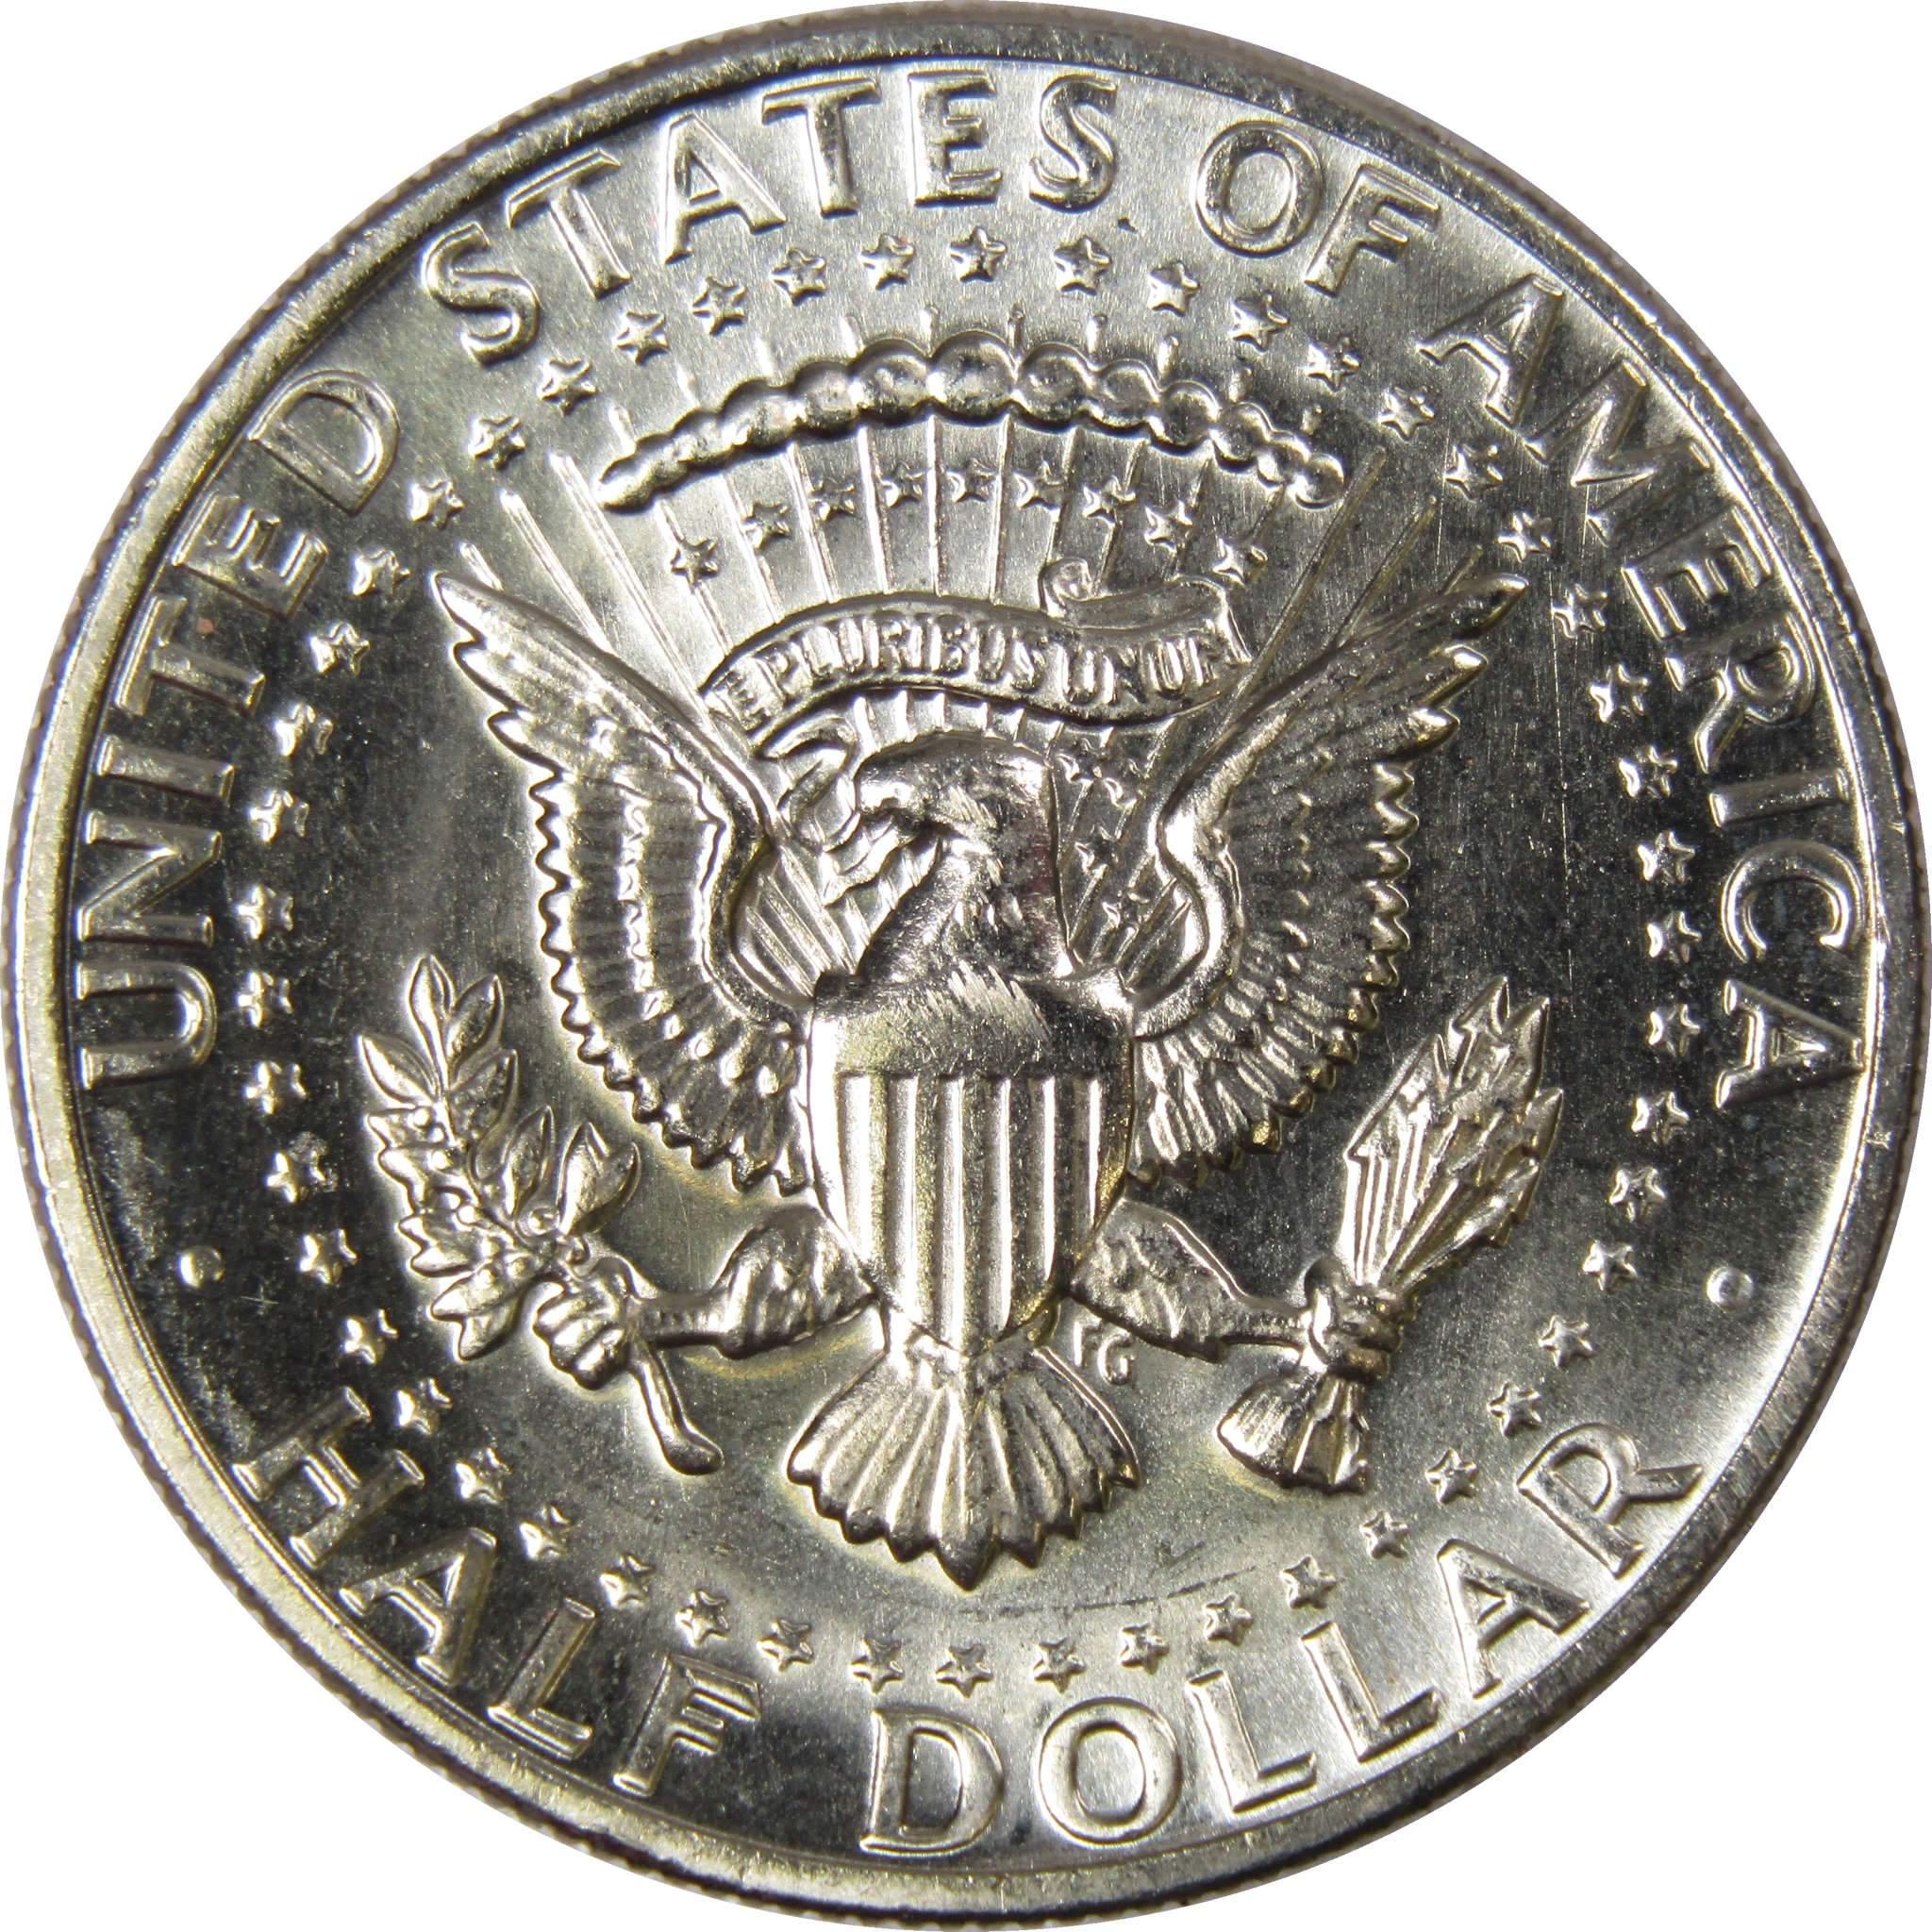 Half dollar (United States coin) - Wikipedia